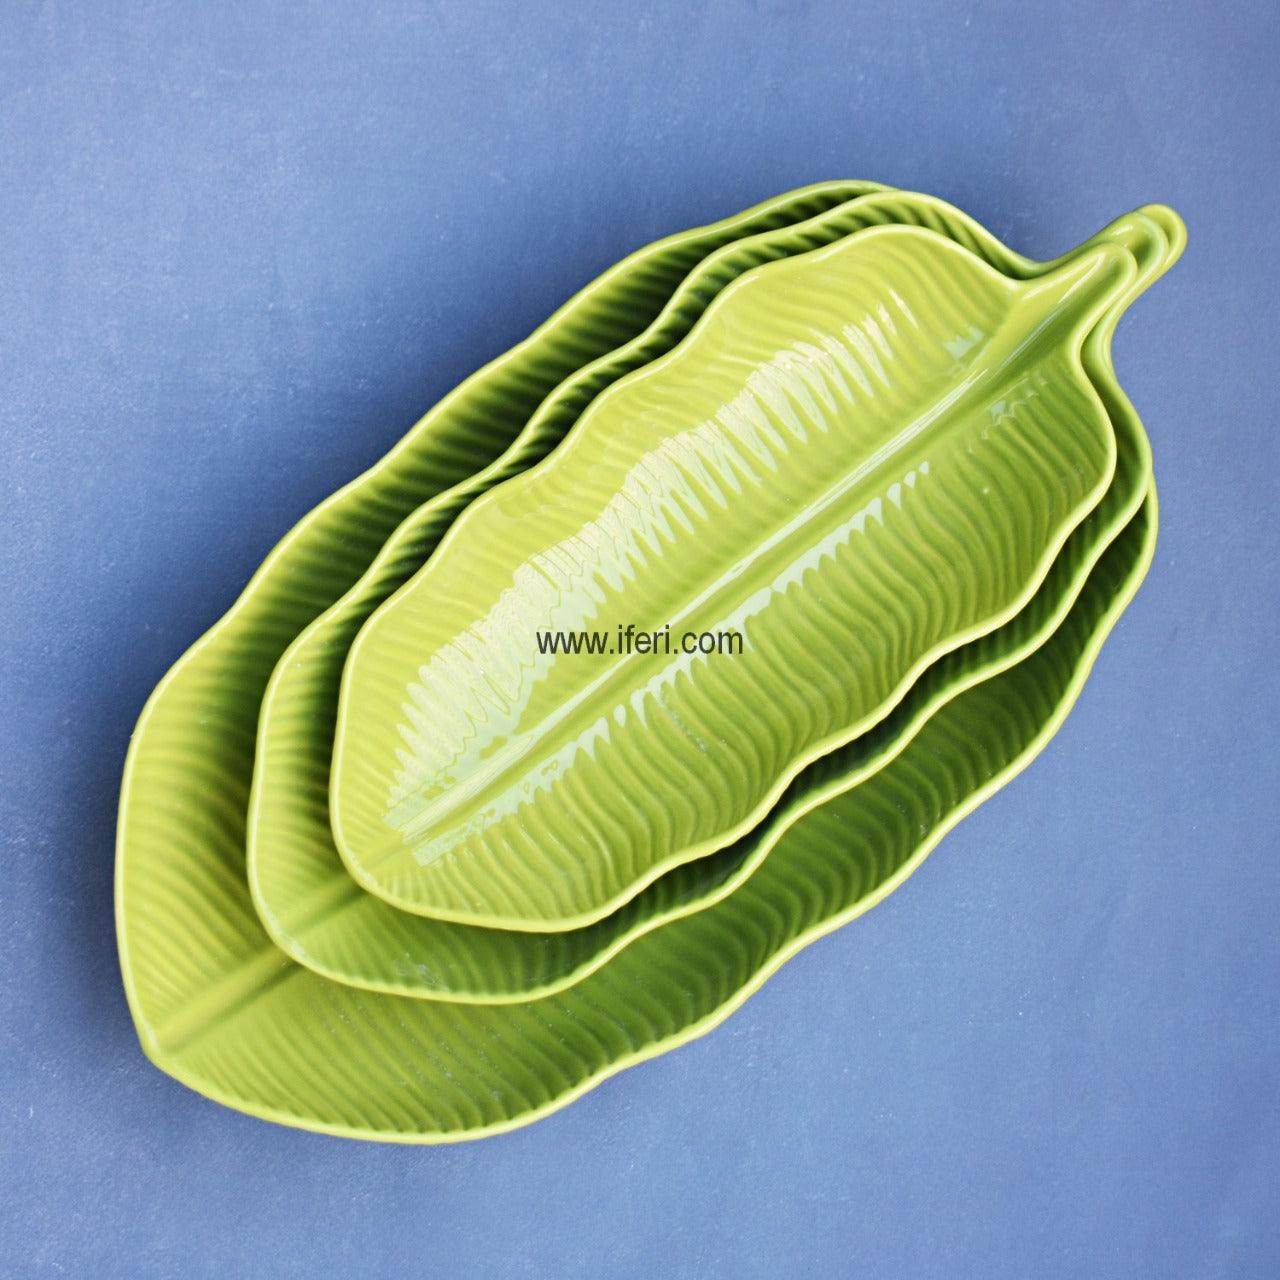 3 Pcs Leaf Shaped Ceramic Serving Dish UT5508 Price in Bangladesh - iferi.com